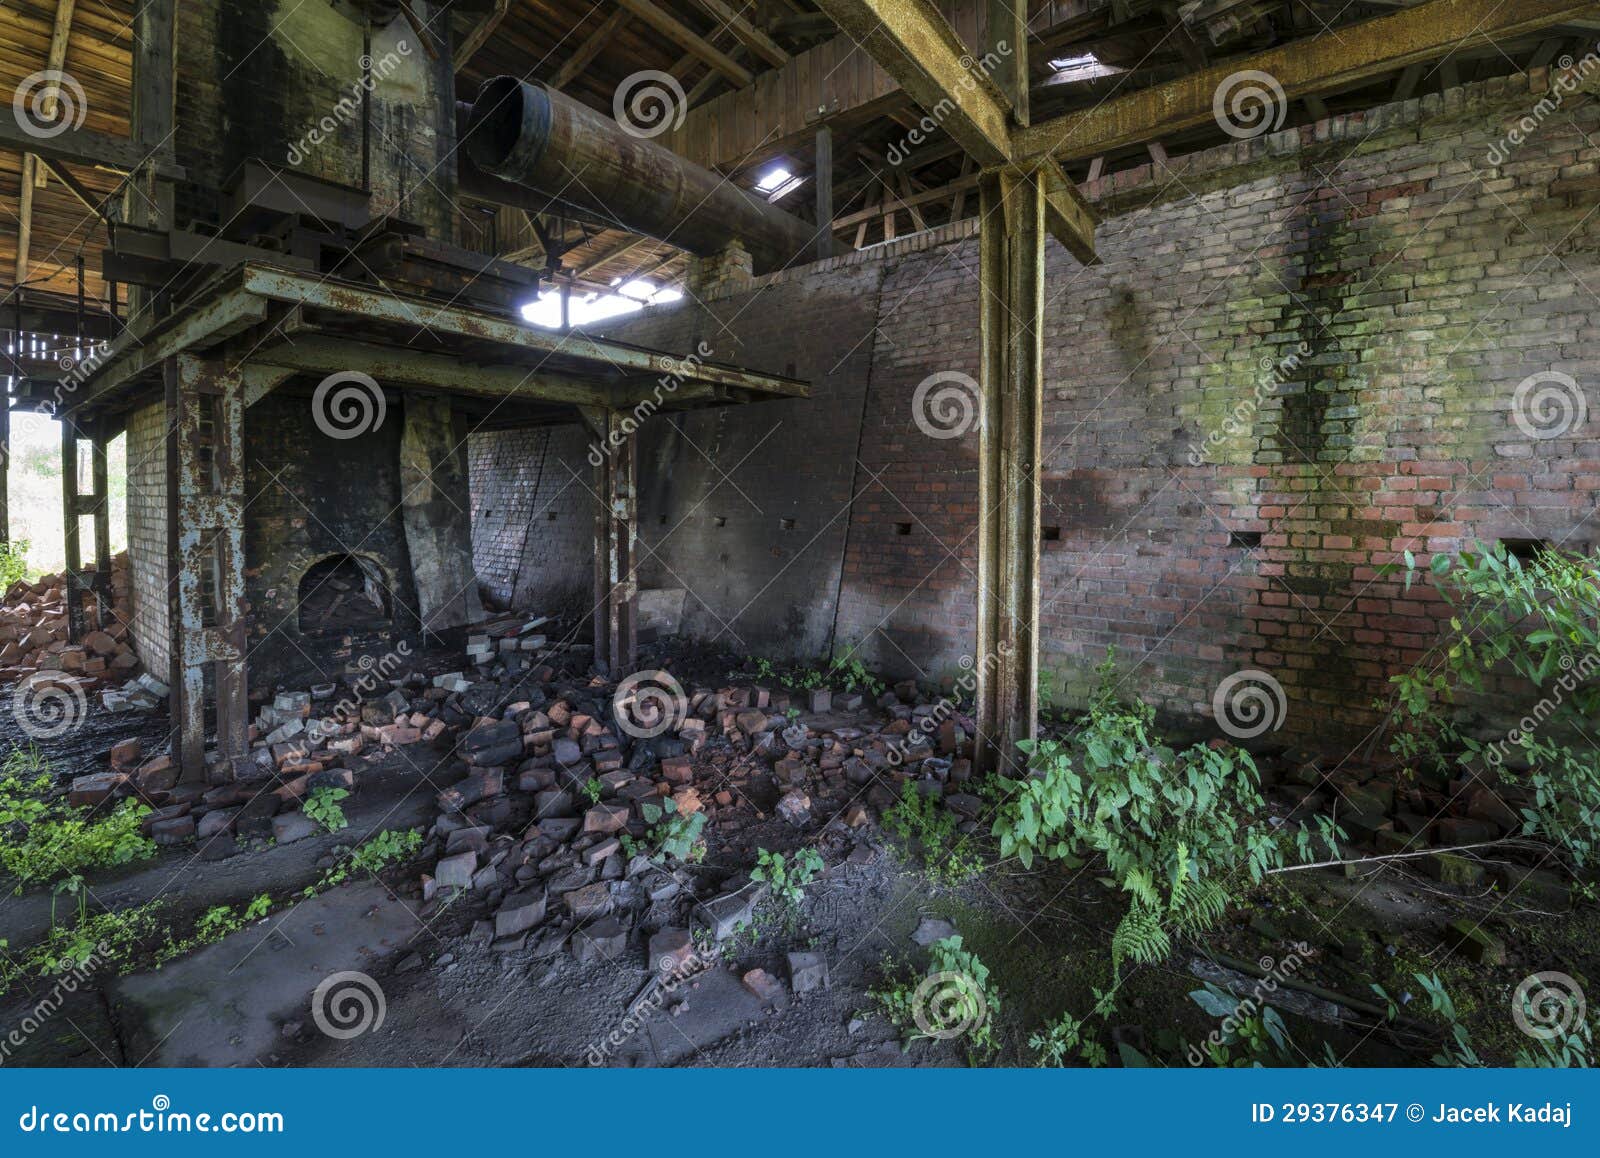 old, abandoned brickyard in poland, pomerania area